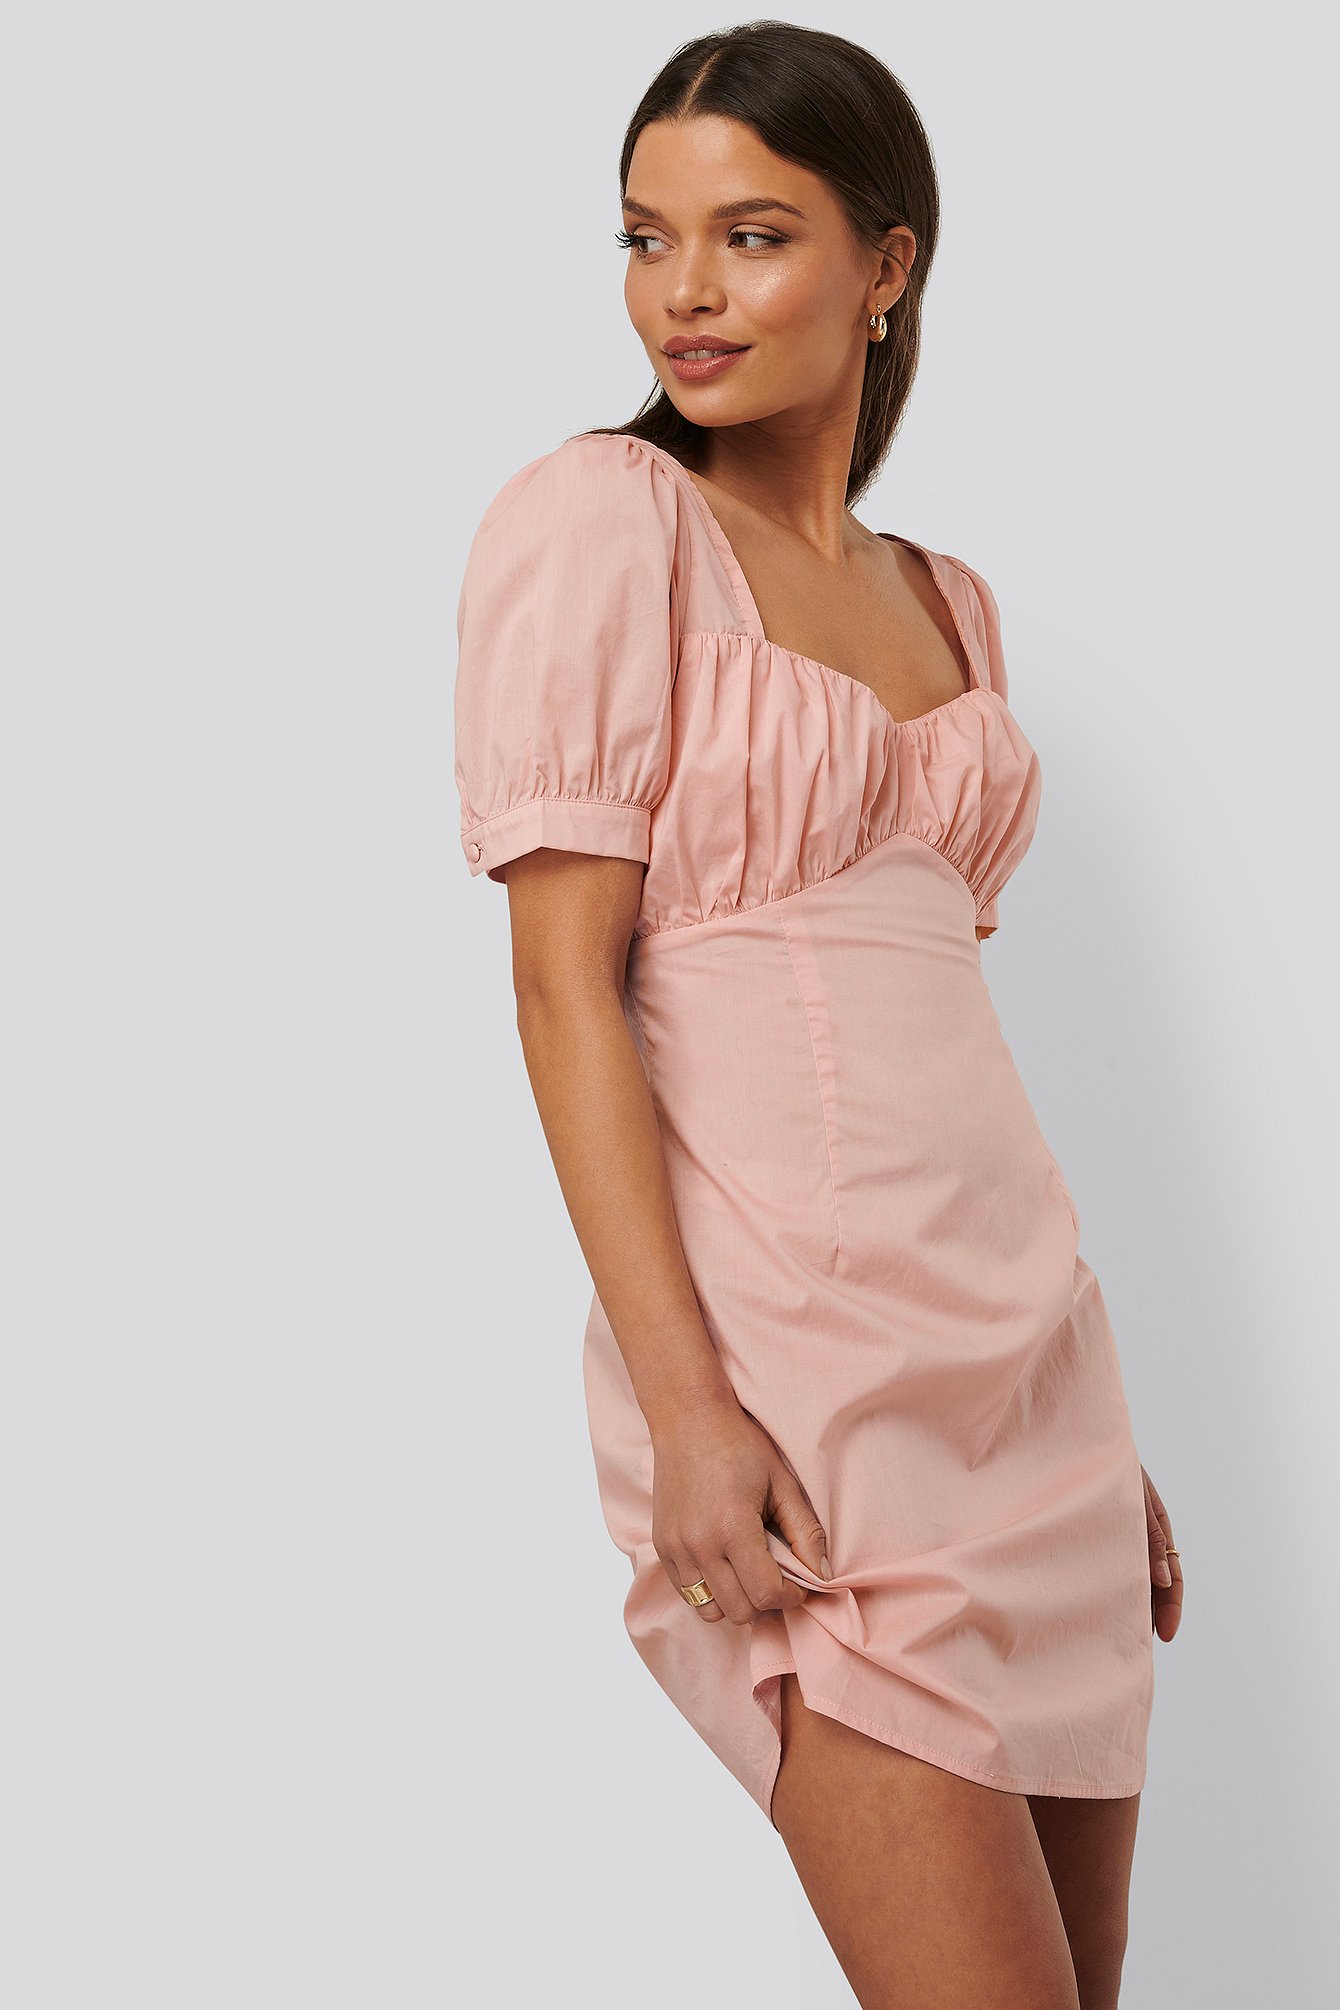 puff sleeve pink dress